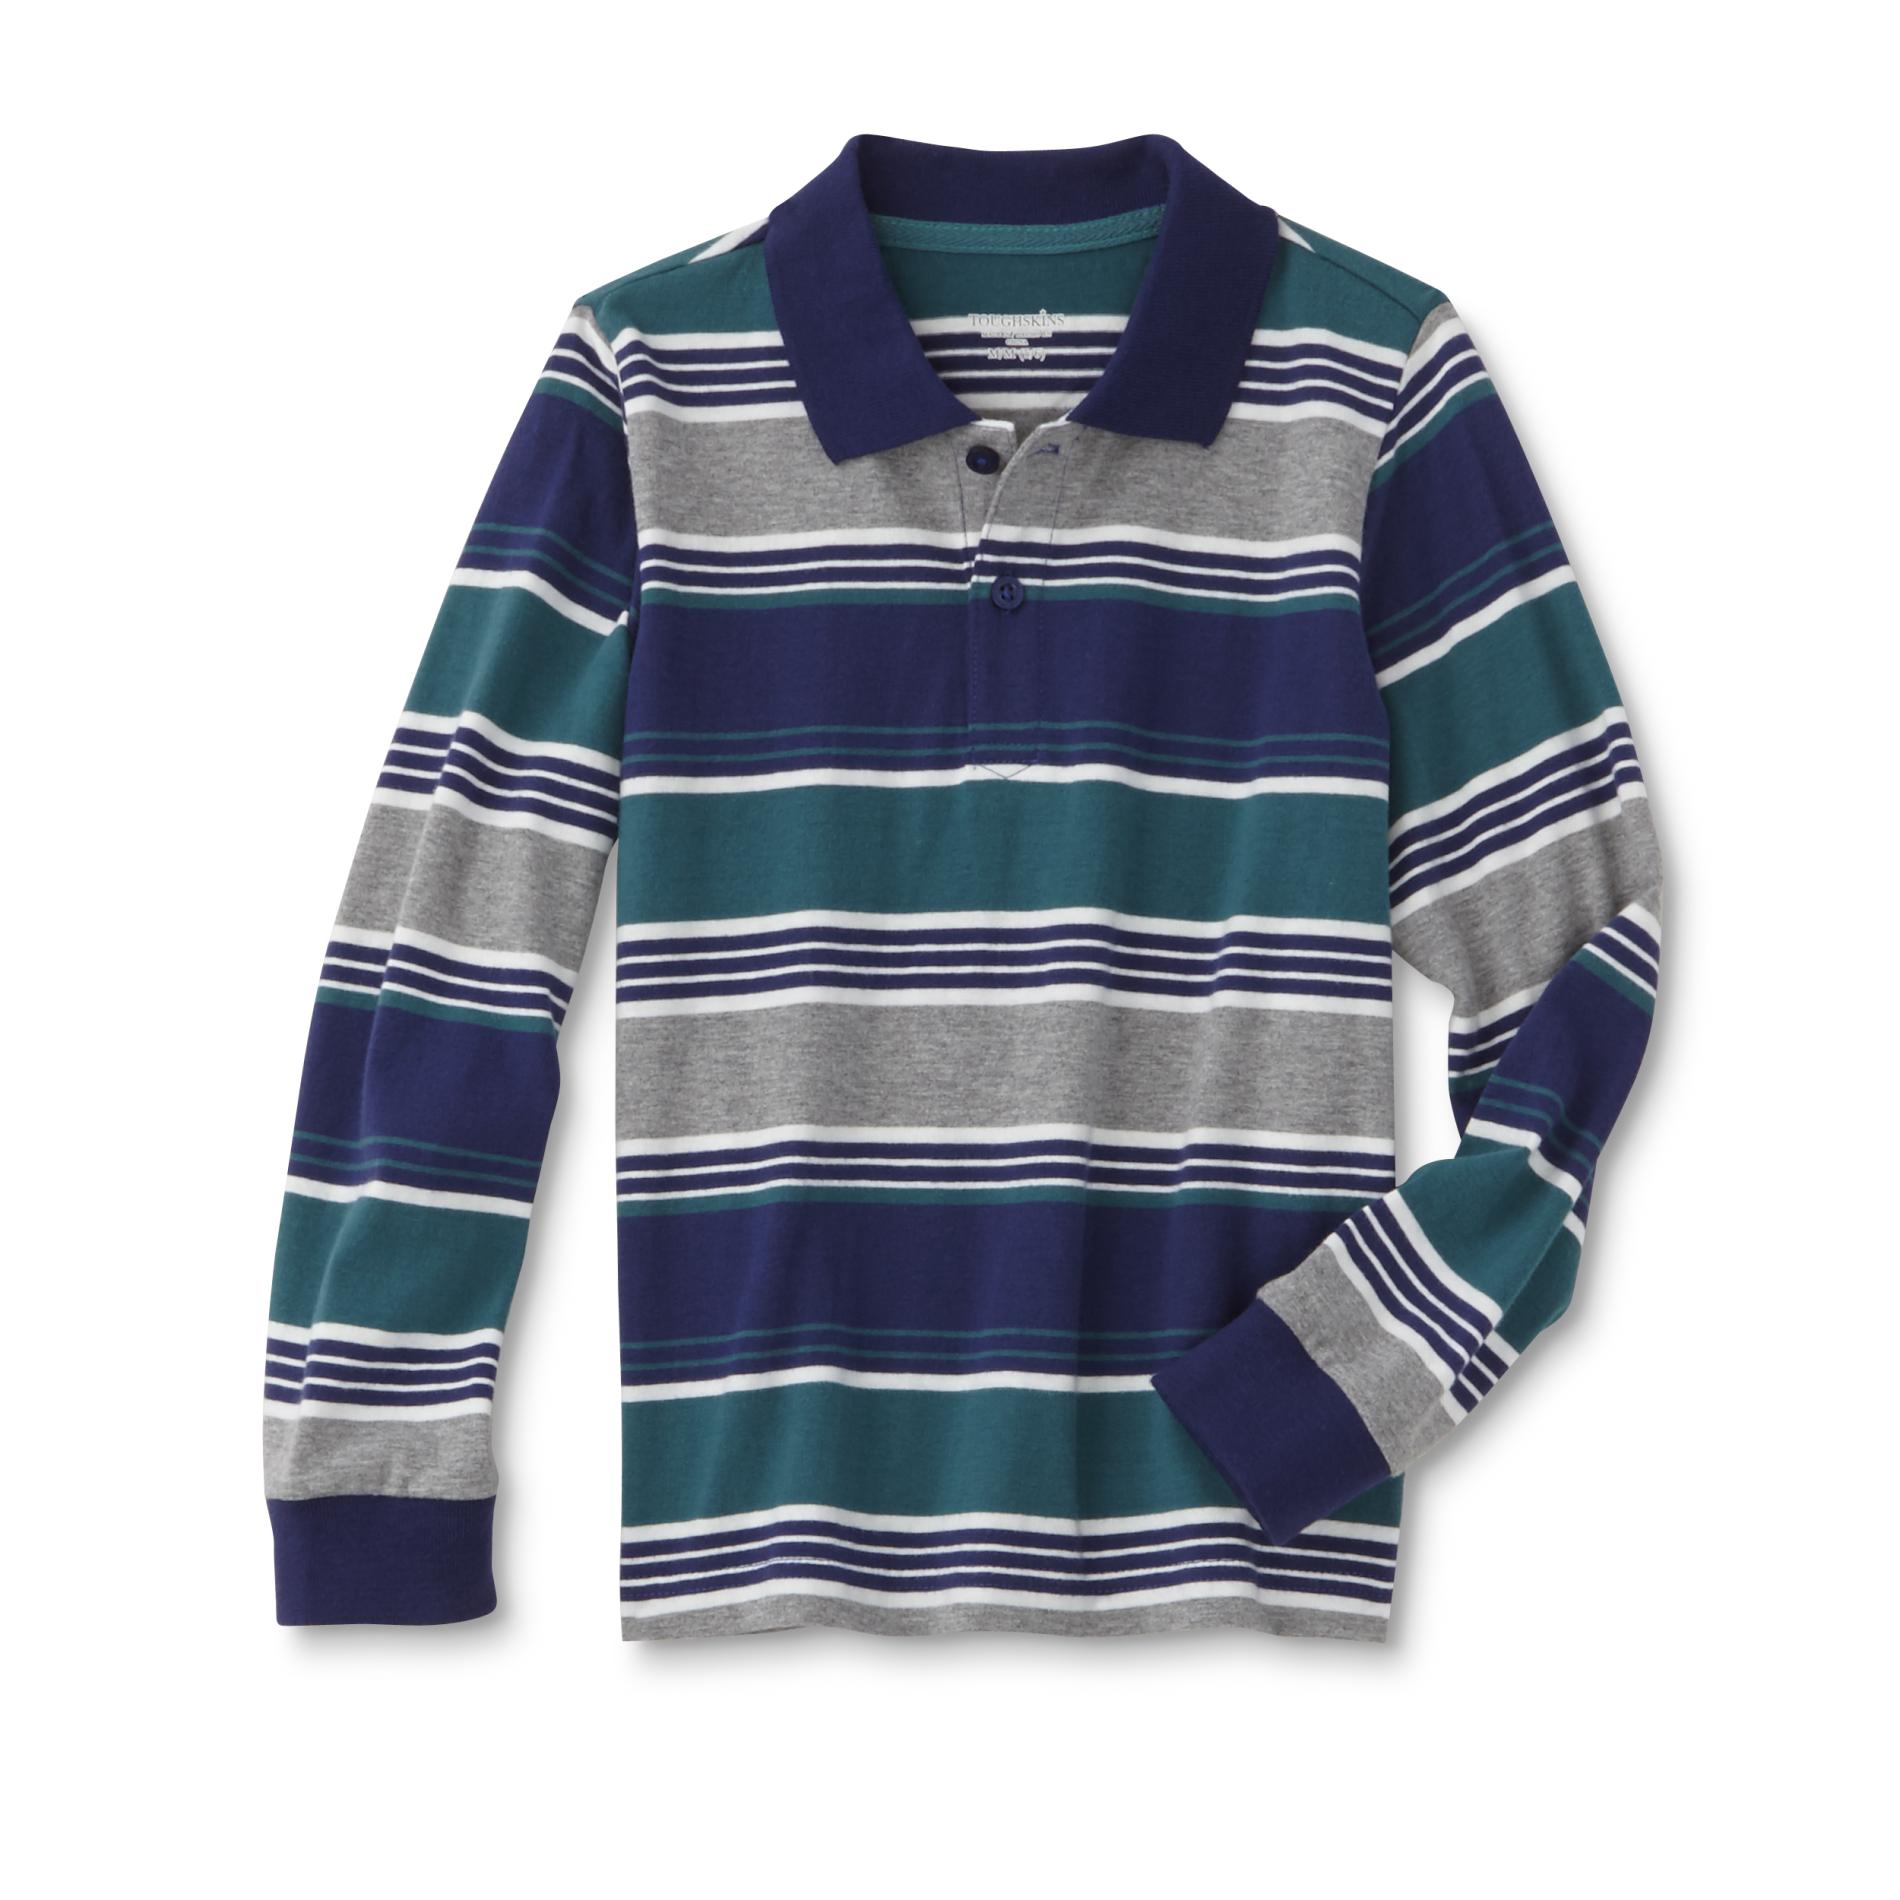 Toughskins Infant & Toddler Boys' Long-Sleeve Polo Shirt - Striped